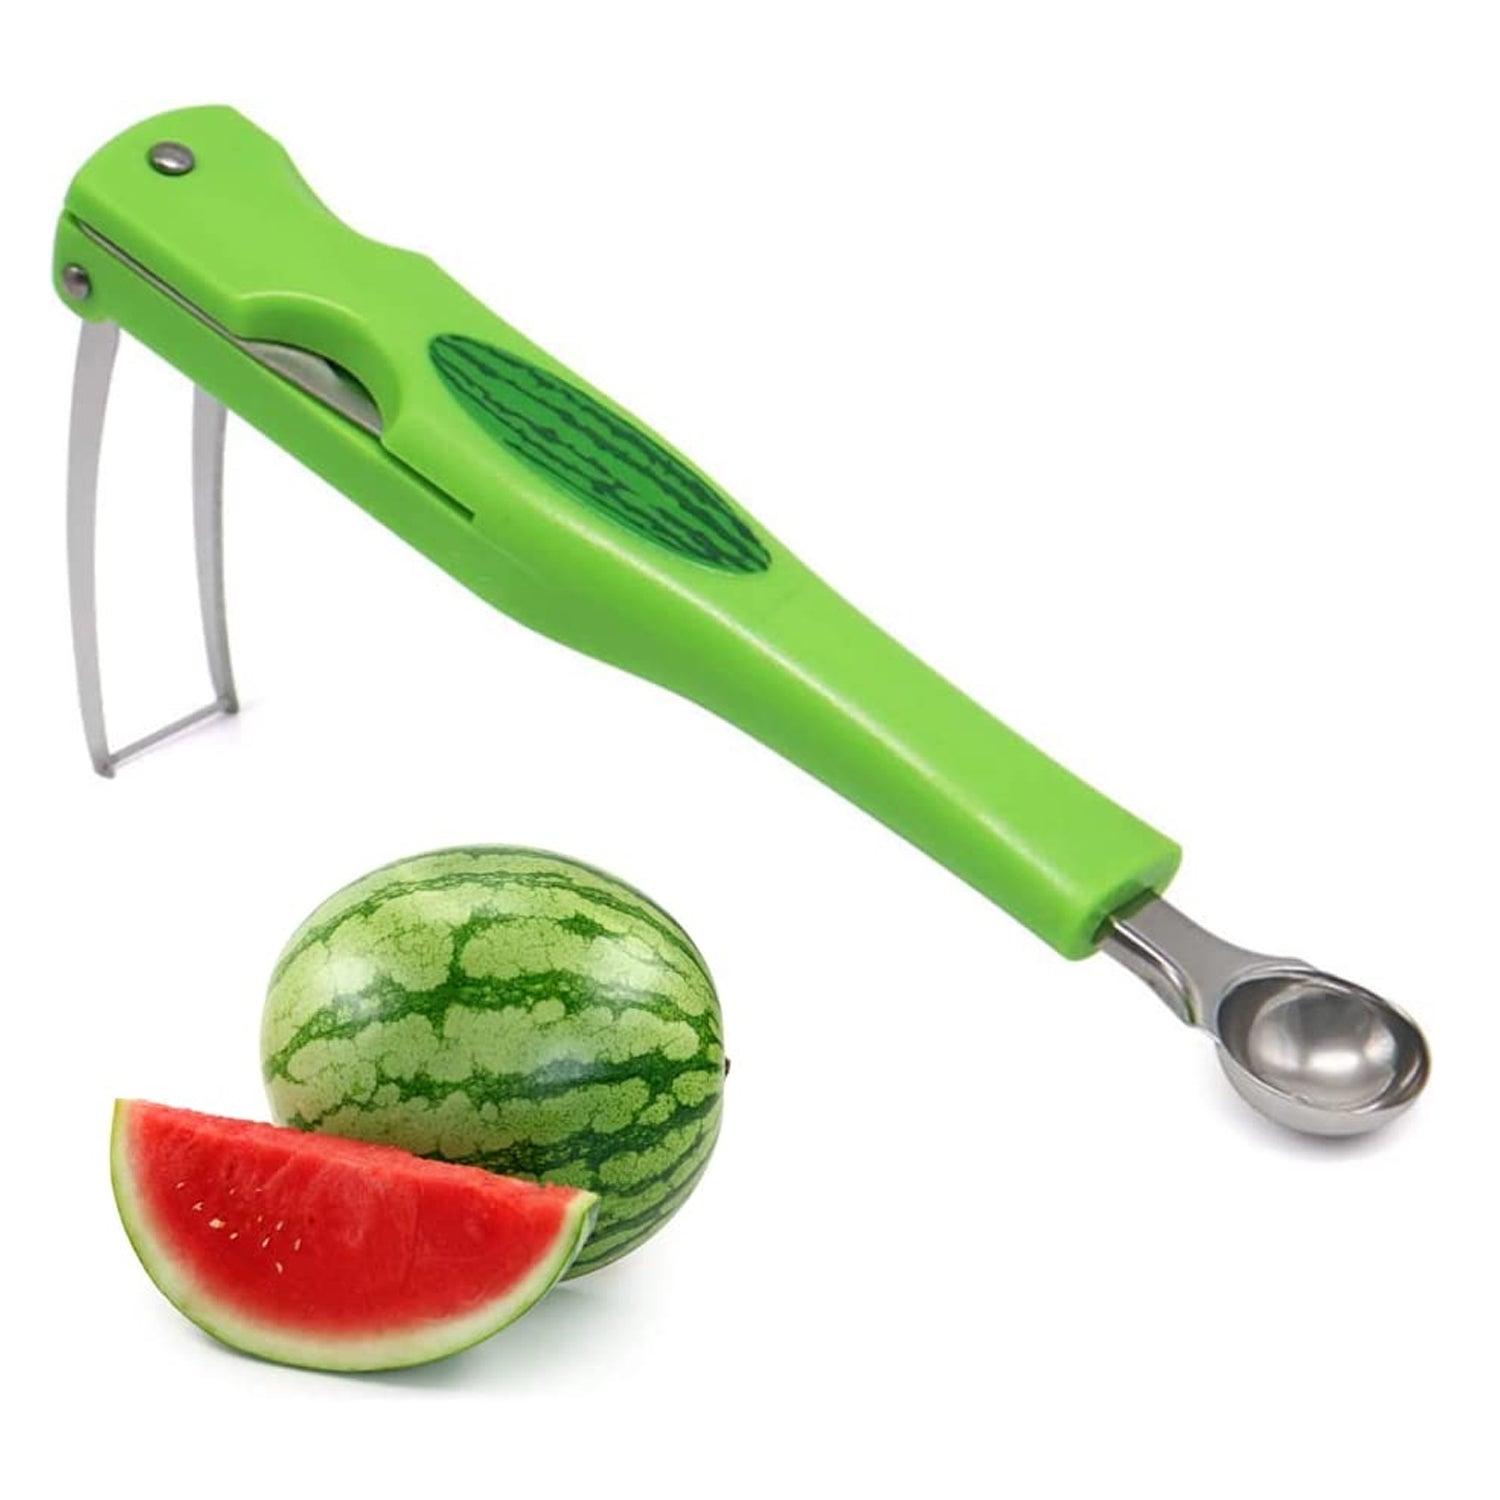 2814 Stainless Steel Fruit Scooper Seed Remover Melon Baller Carving Knife Double Sided Melon Baller for Watermelon Ice Cream. JK Trends